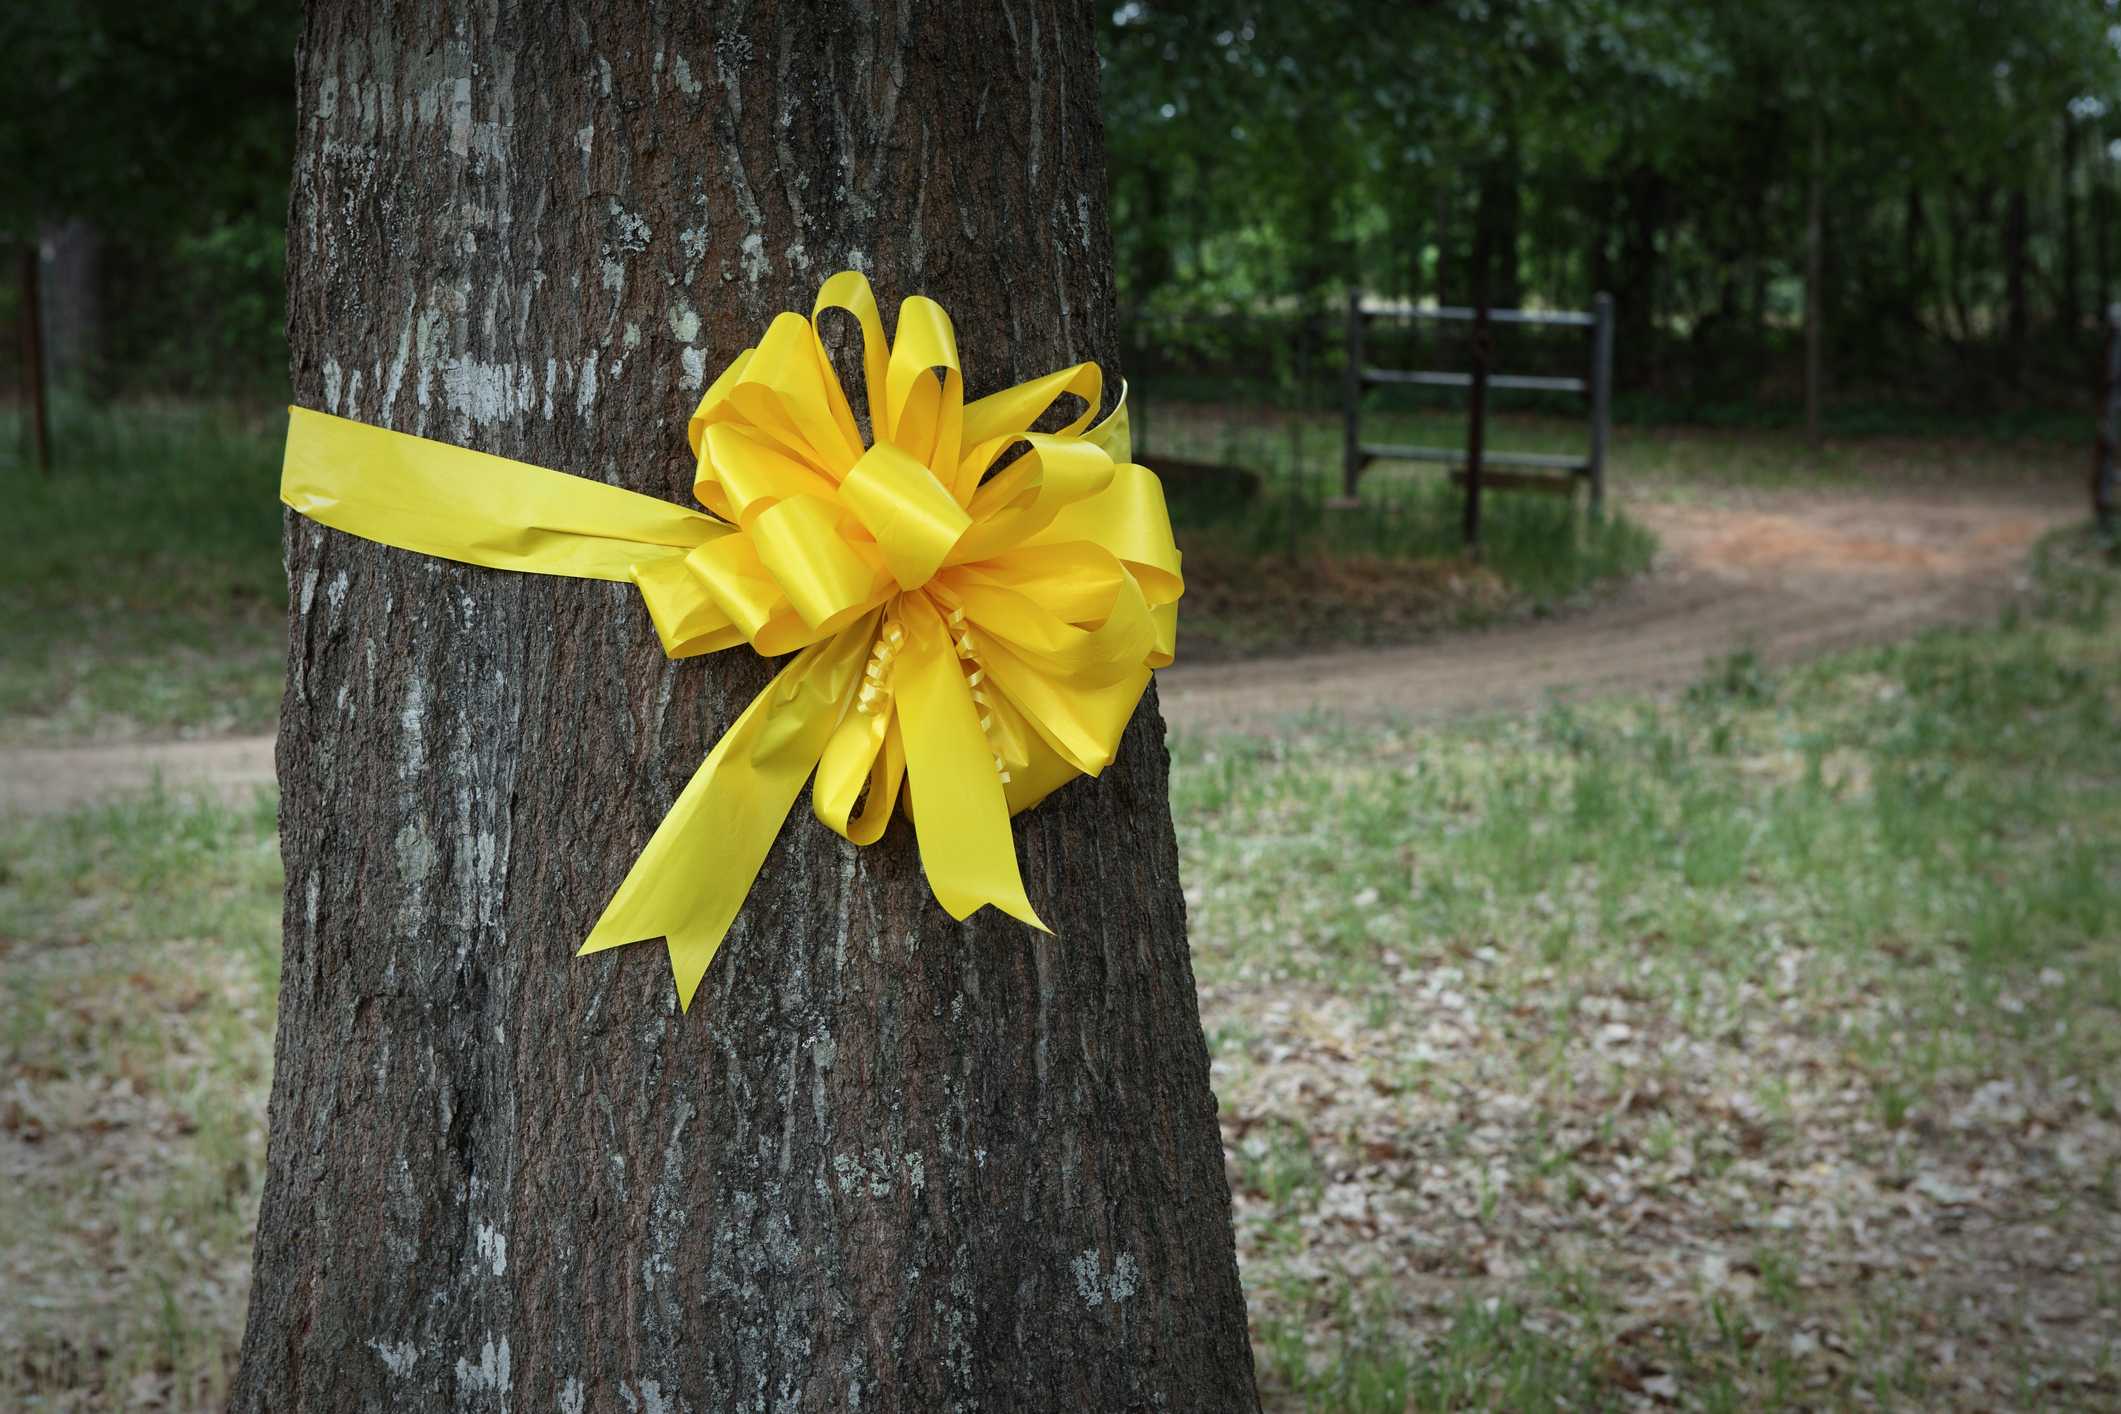 yellow ribbon and bow around tree trunk, symbolizing the Iranian Hostage Crisis